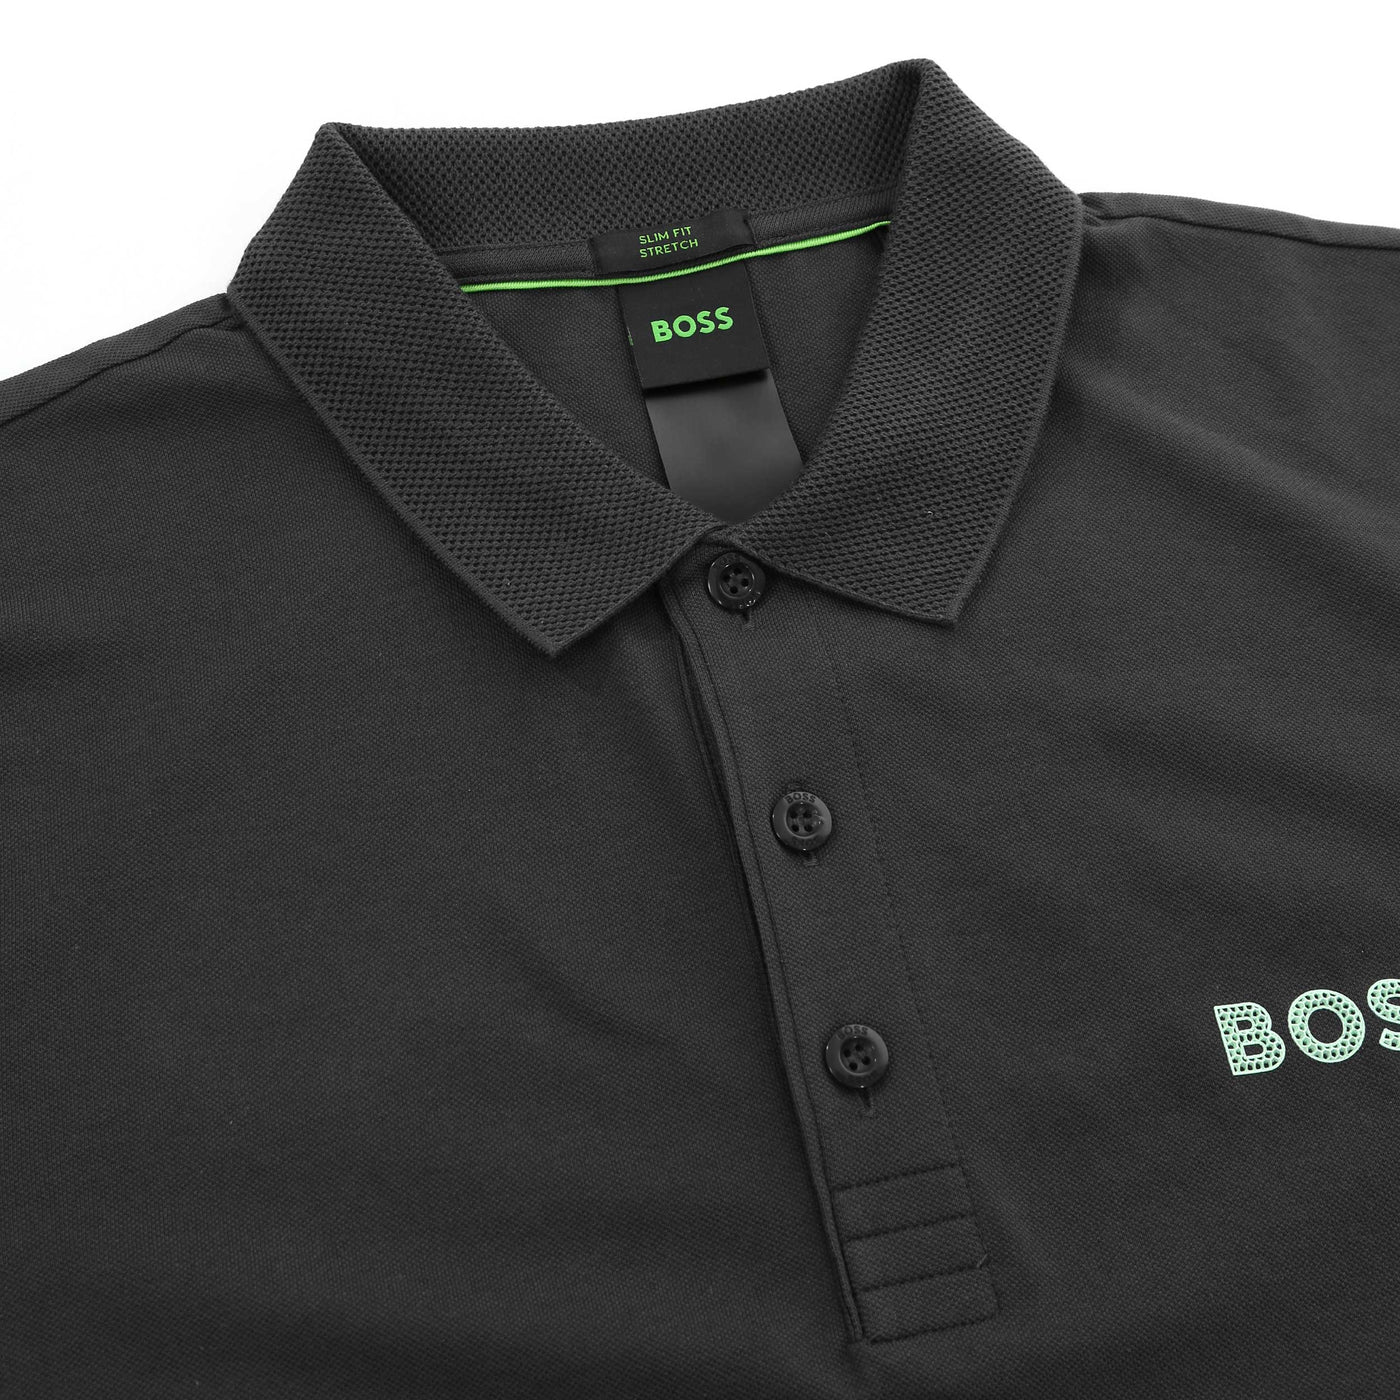 BOSS Paule Polo Shirt in Charcoal Placket